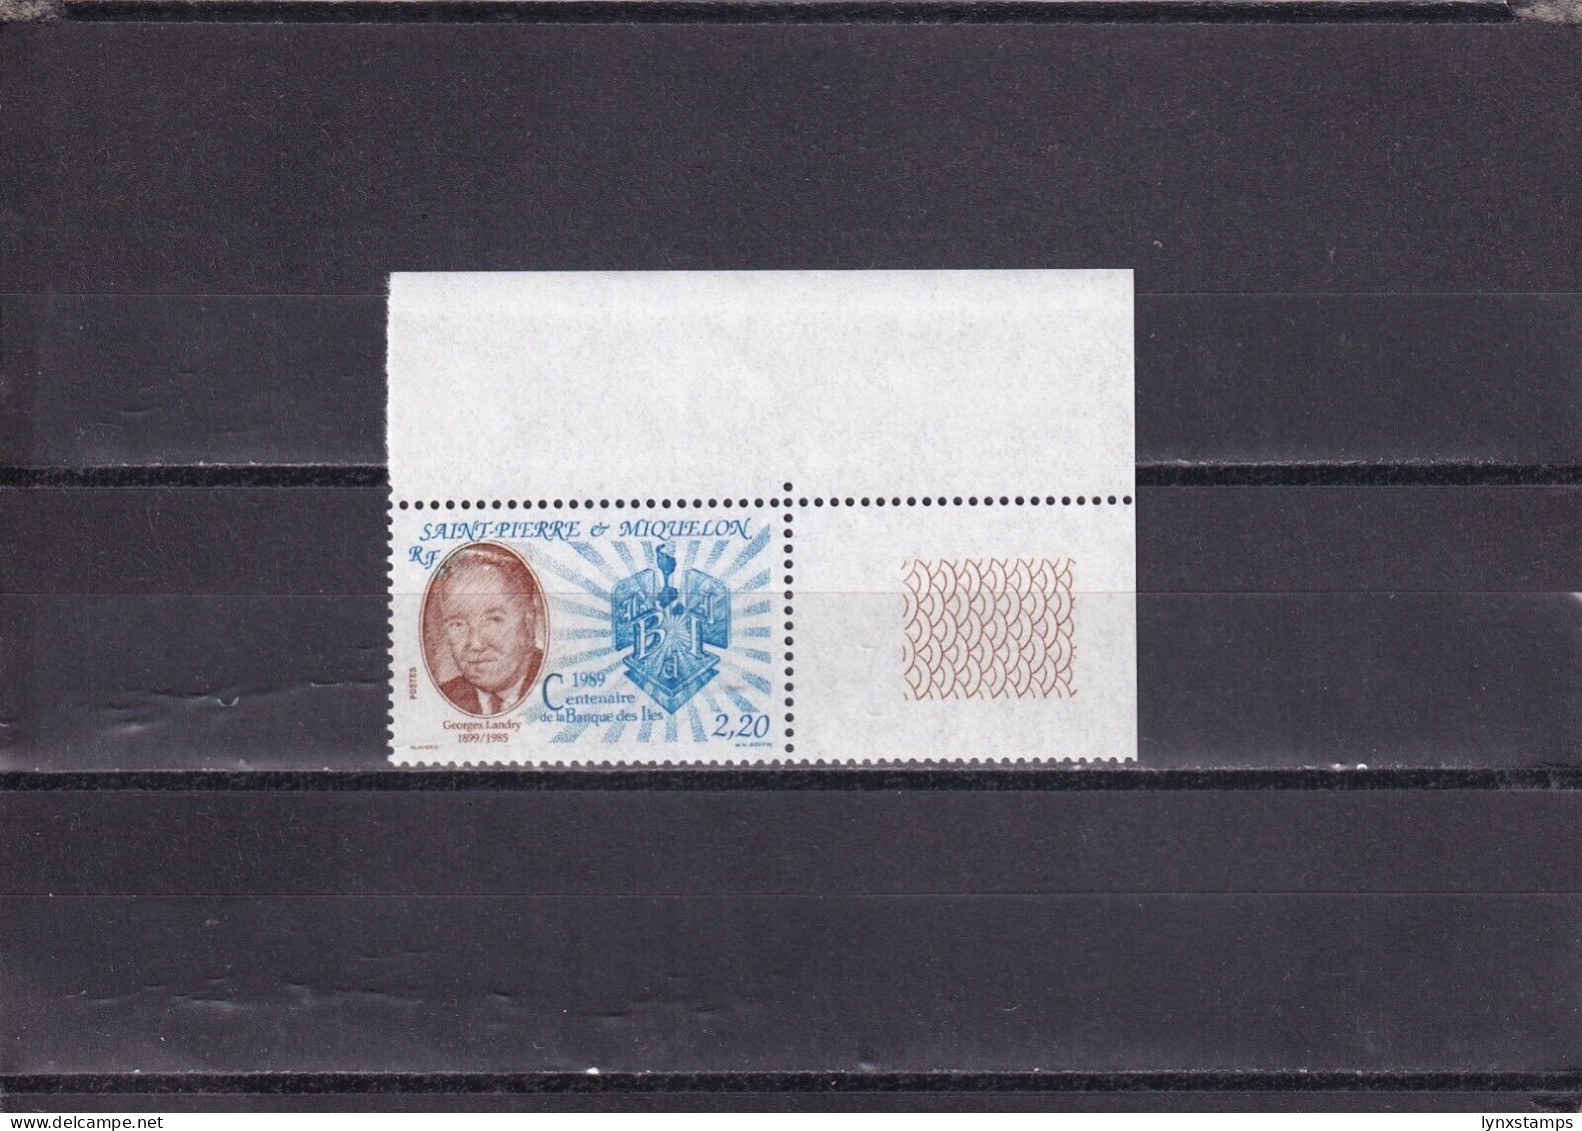 SA03 St Pierre Et Miquelon France 1989 100th Anniv Of Island Bank Mint Stamp - Ongebruikt